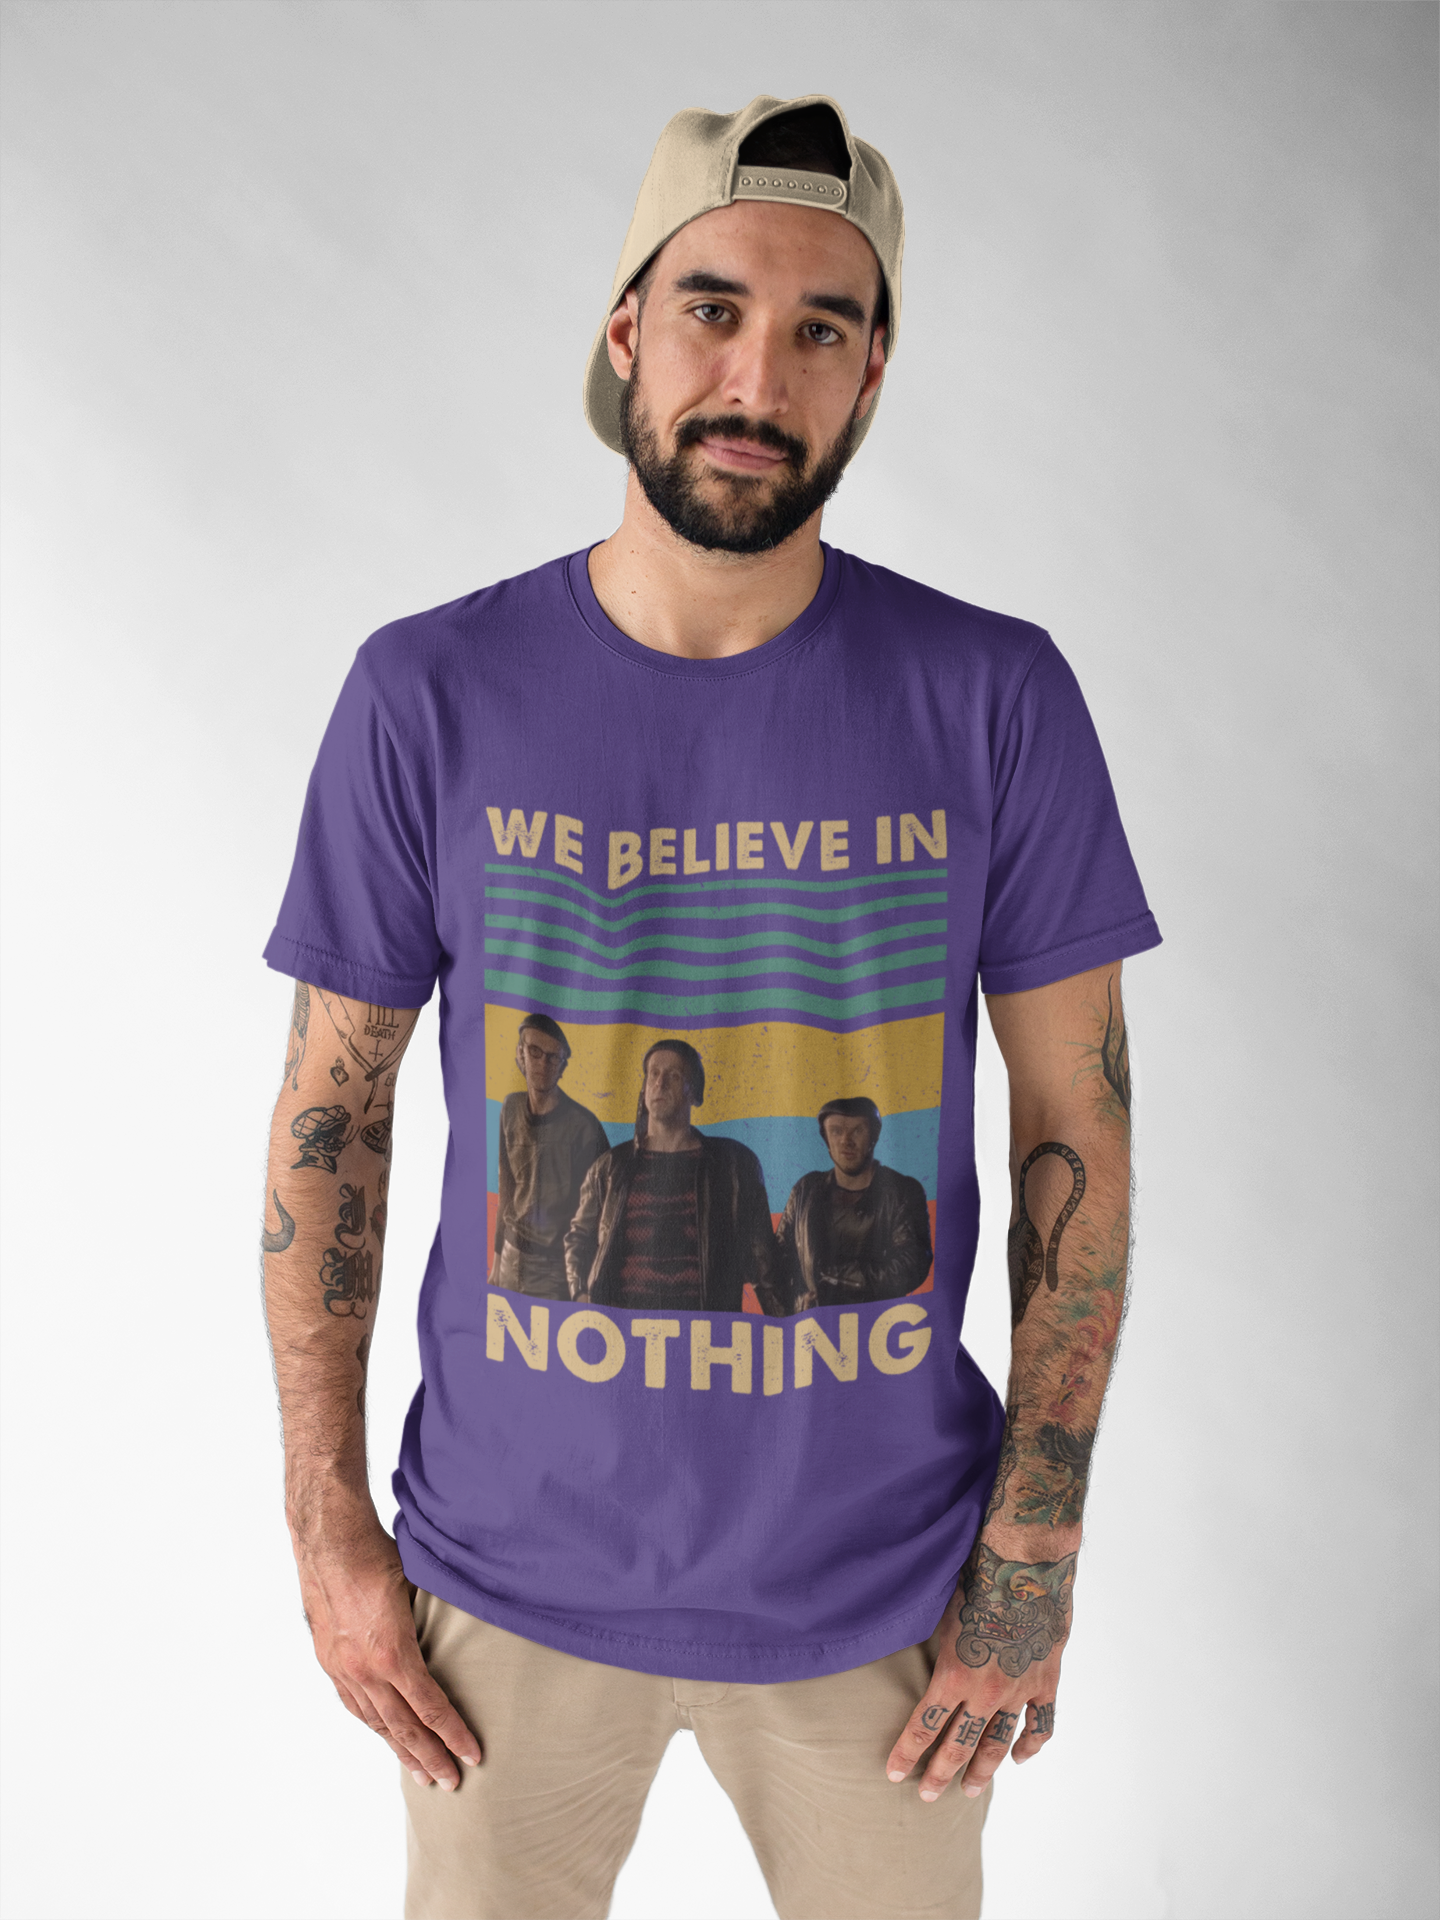 The Big Lebowski Vintage T Shirt, We Believe In Nothing Tshirt, Nihilist T Shirt